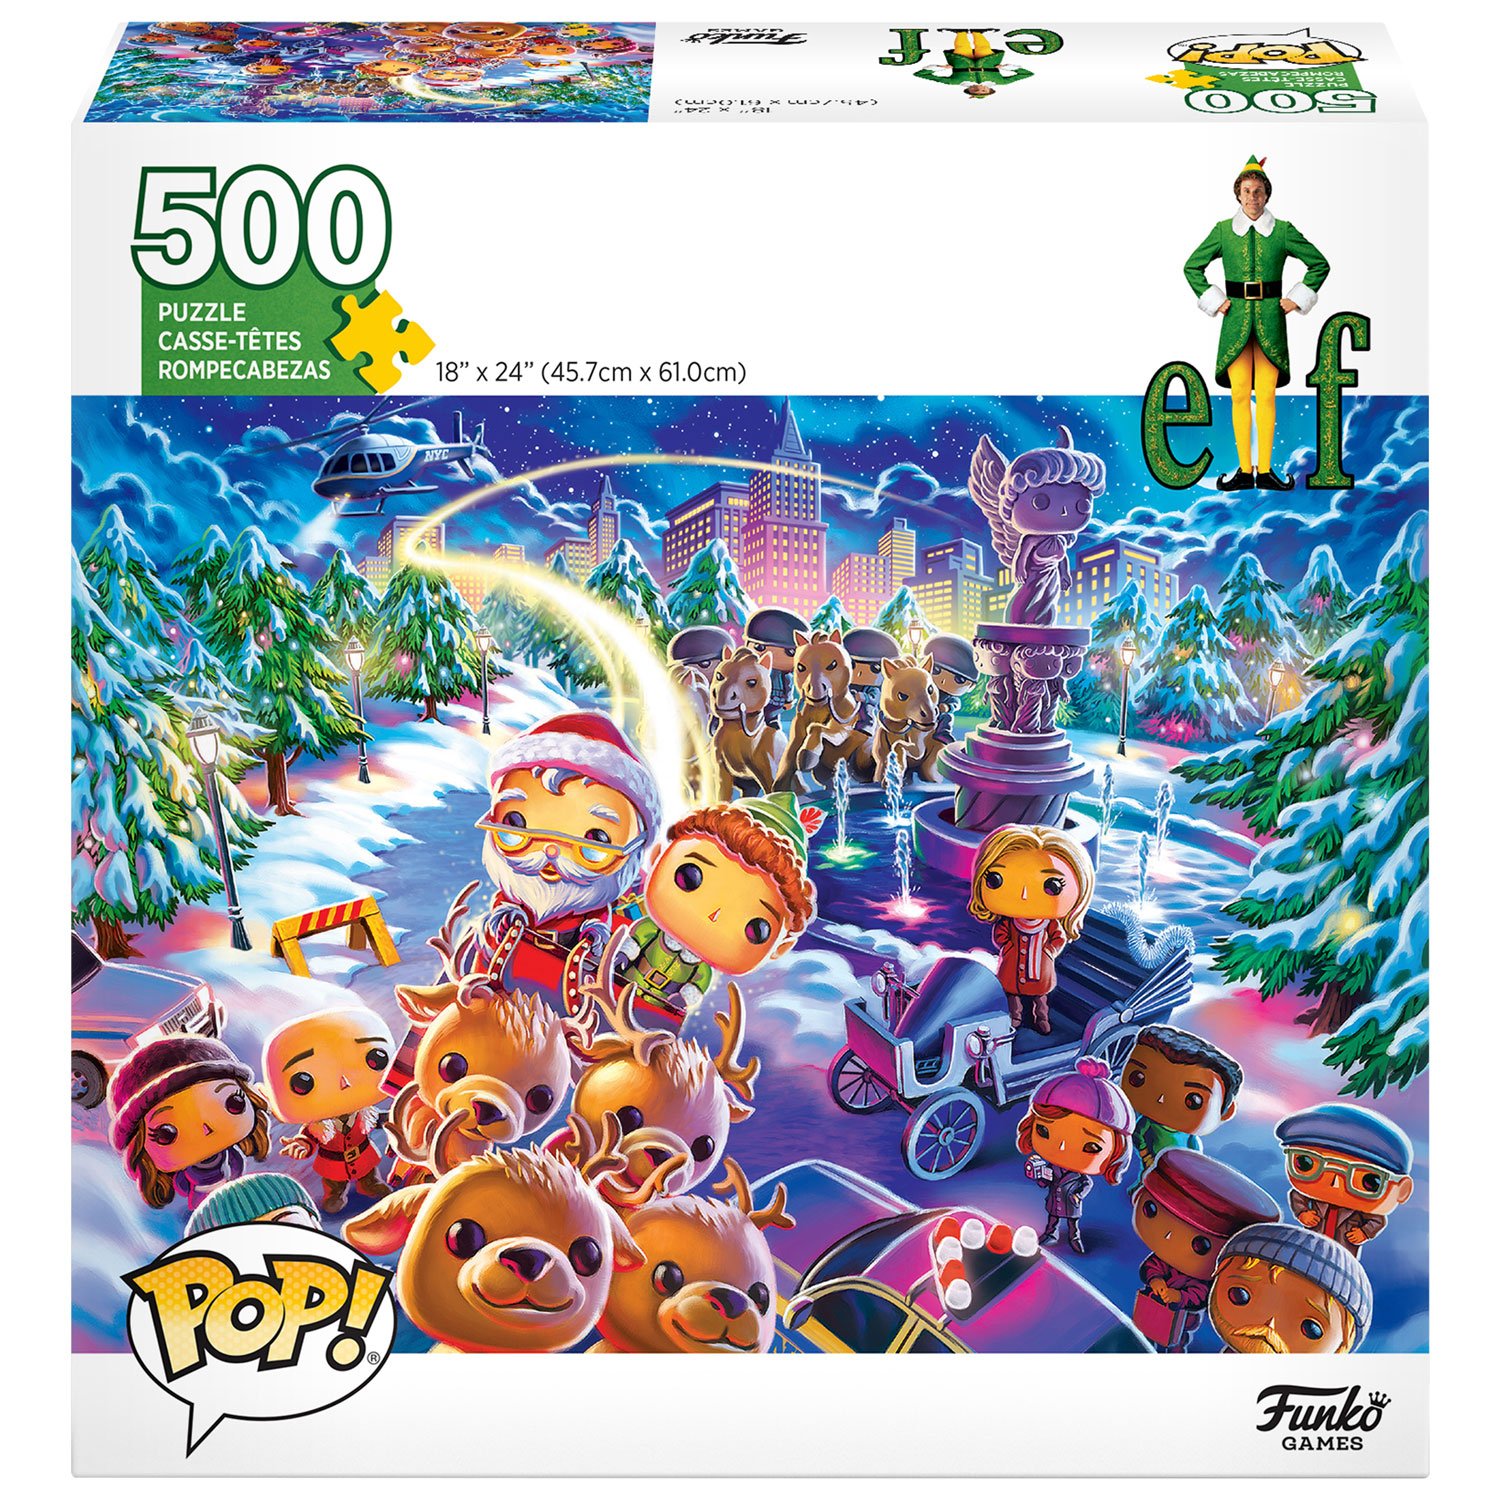 Funko Pop: Elf Puzzle - 500 Pieces